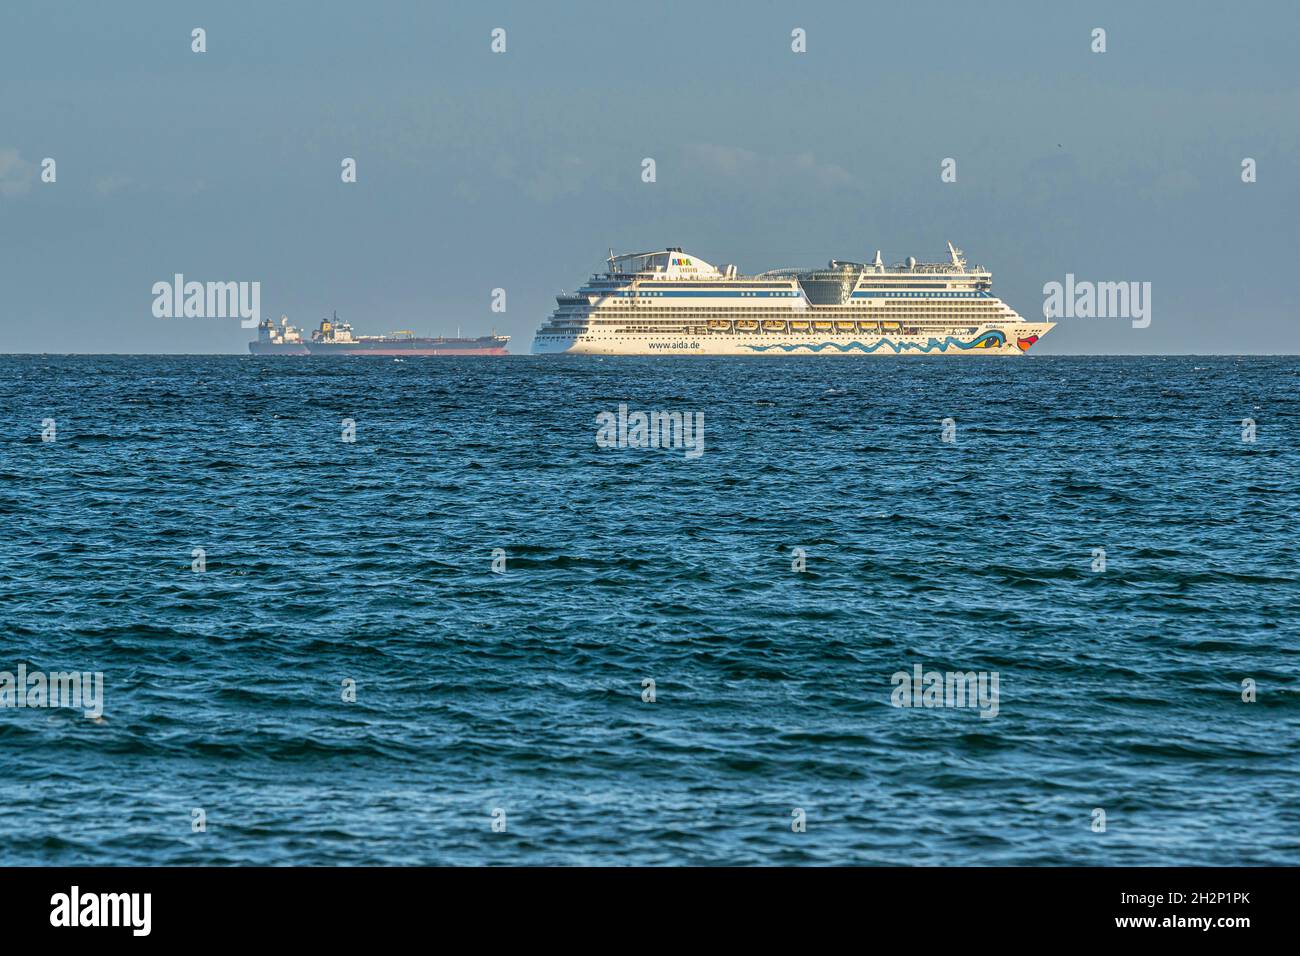 Cruise ship and container ship off the North Sea in Denmark. Skagen, Frederikshavn, North Jutland, Vendsyssel-Thy, Denmark, Europe Stock Photo